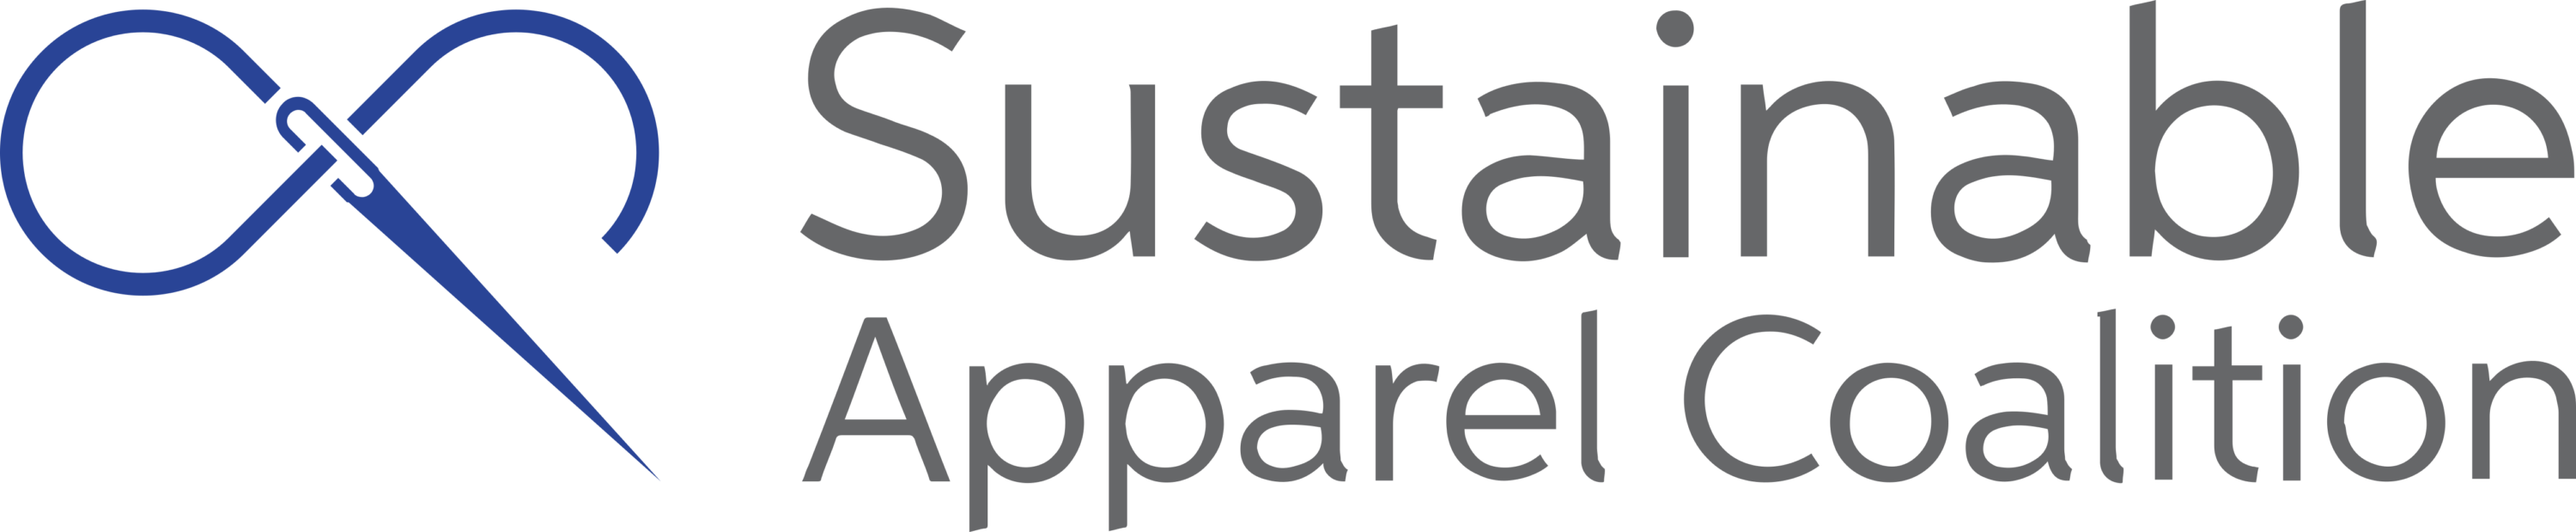 Sustainable Apparel Coalition Logo